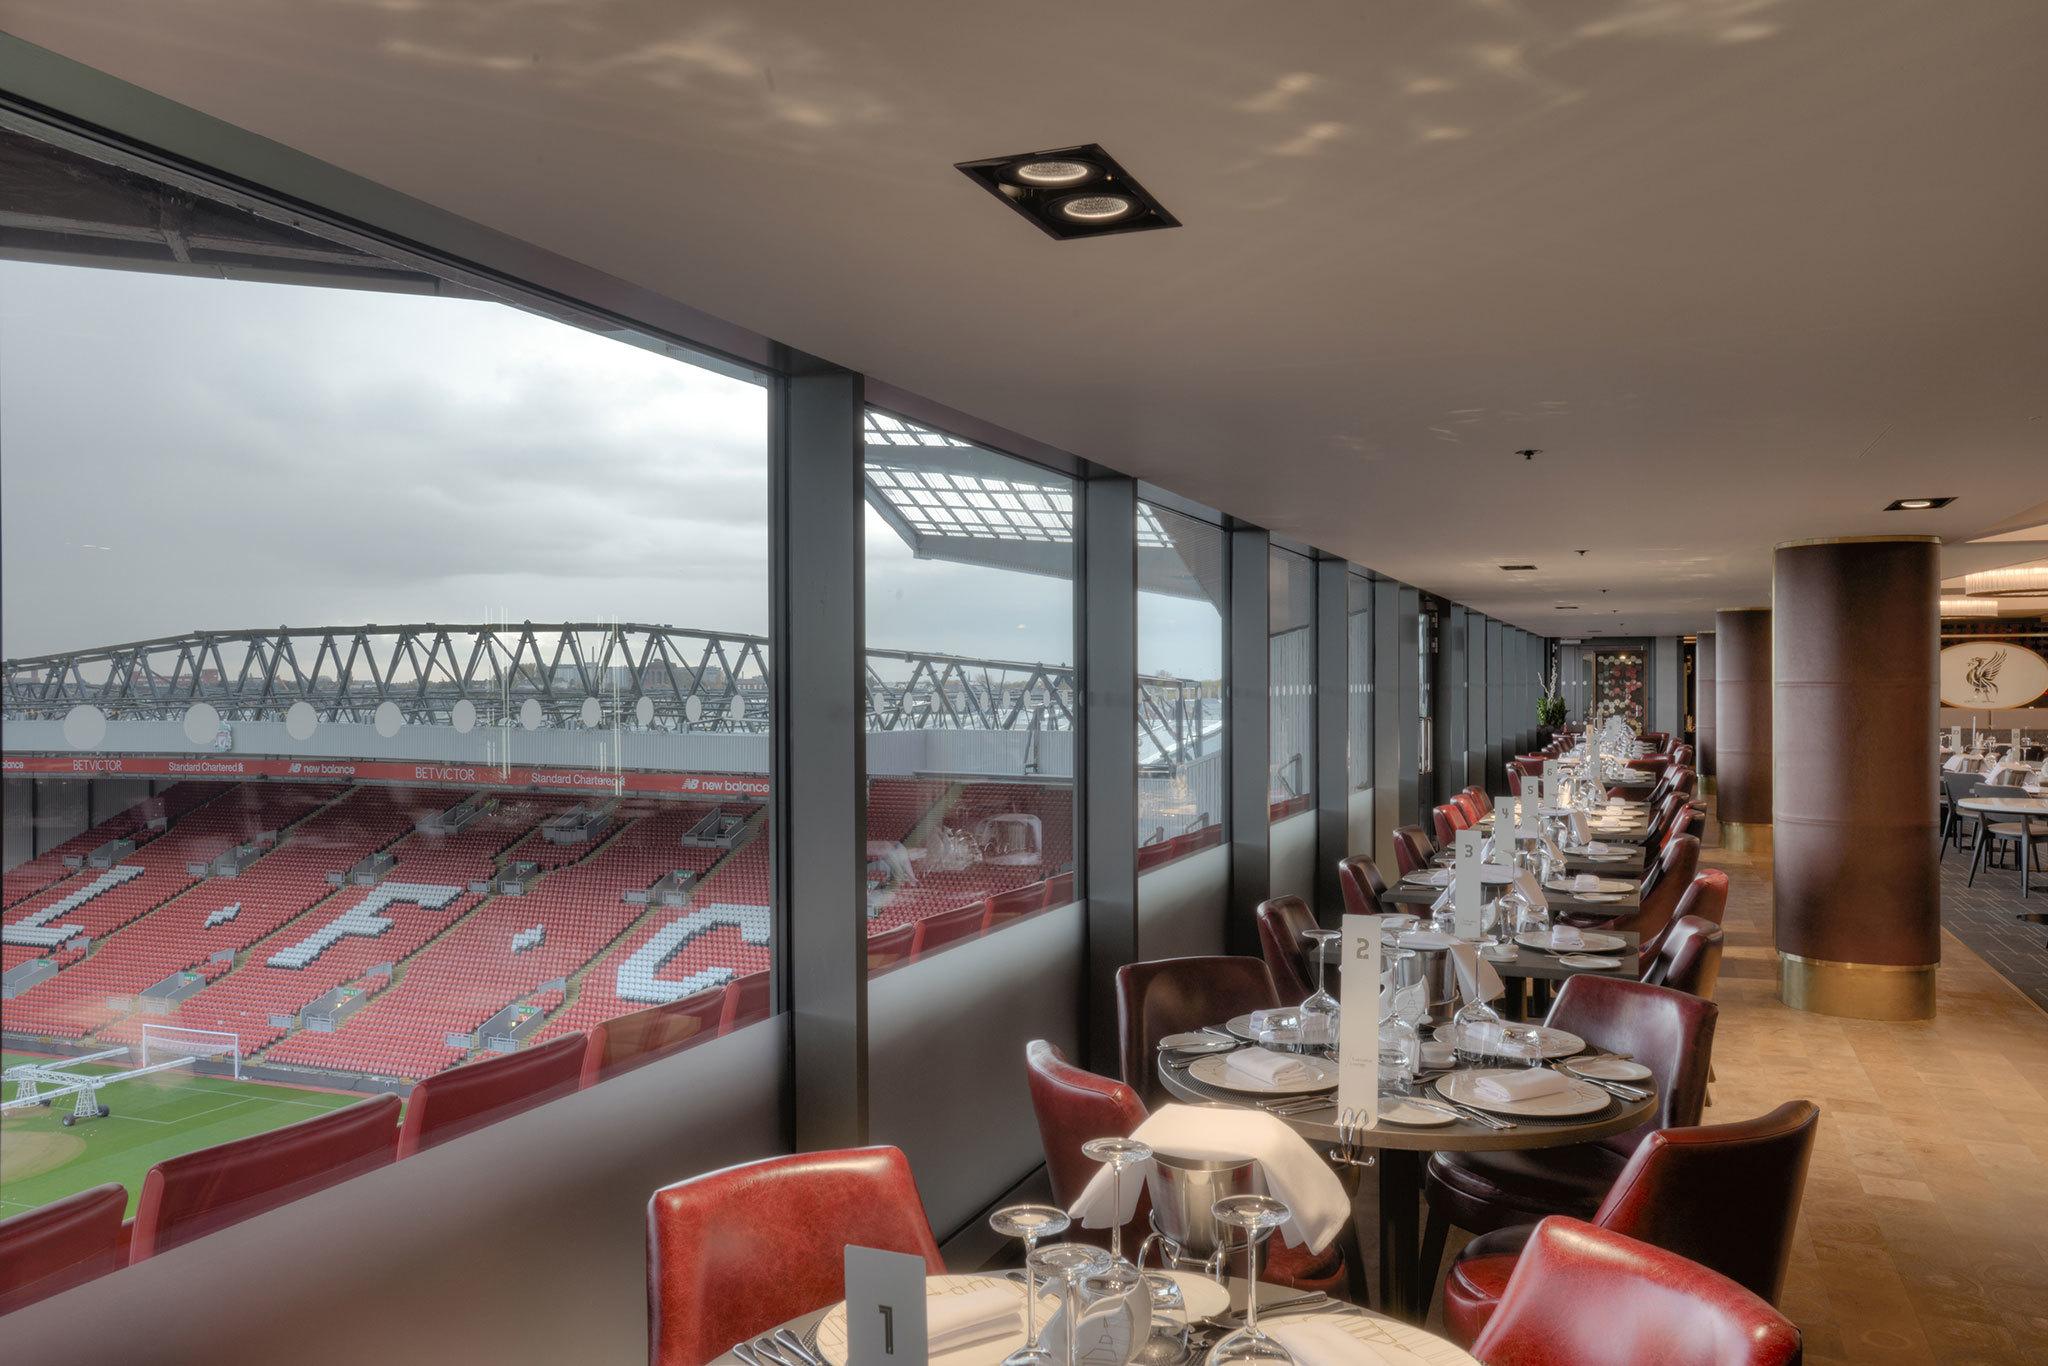 European Lounge, Liverpool Football Club photo #7